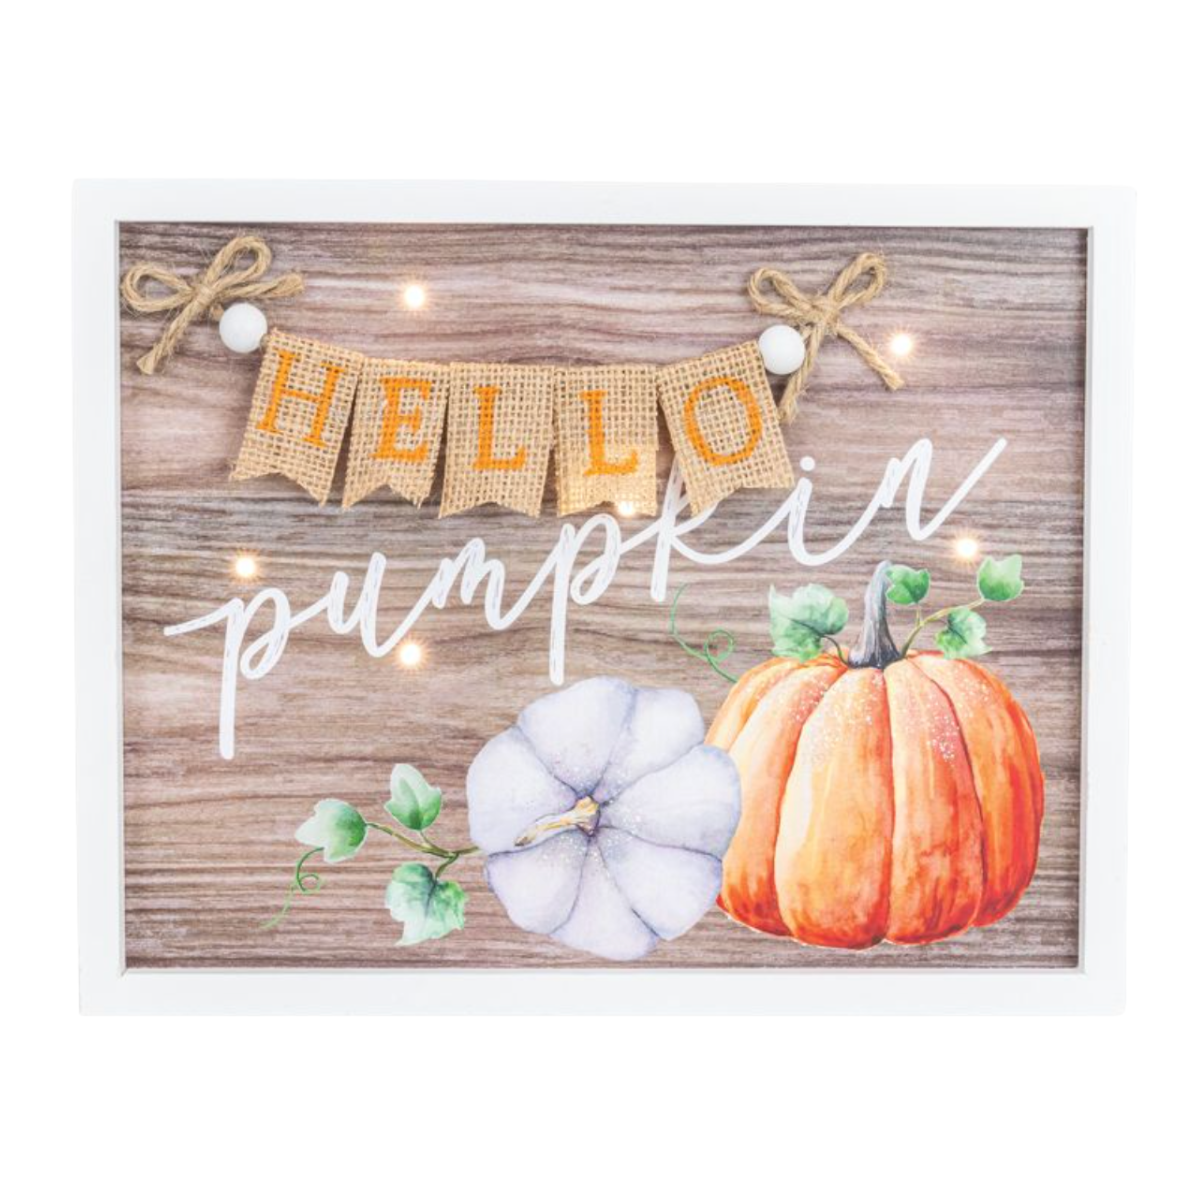 wooden hello pumpkin sign with lights